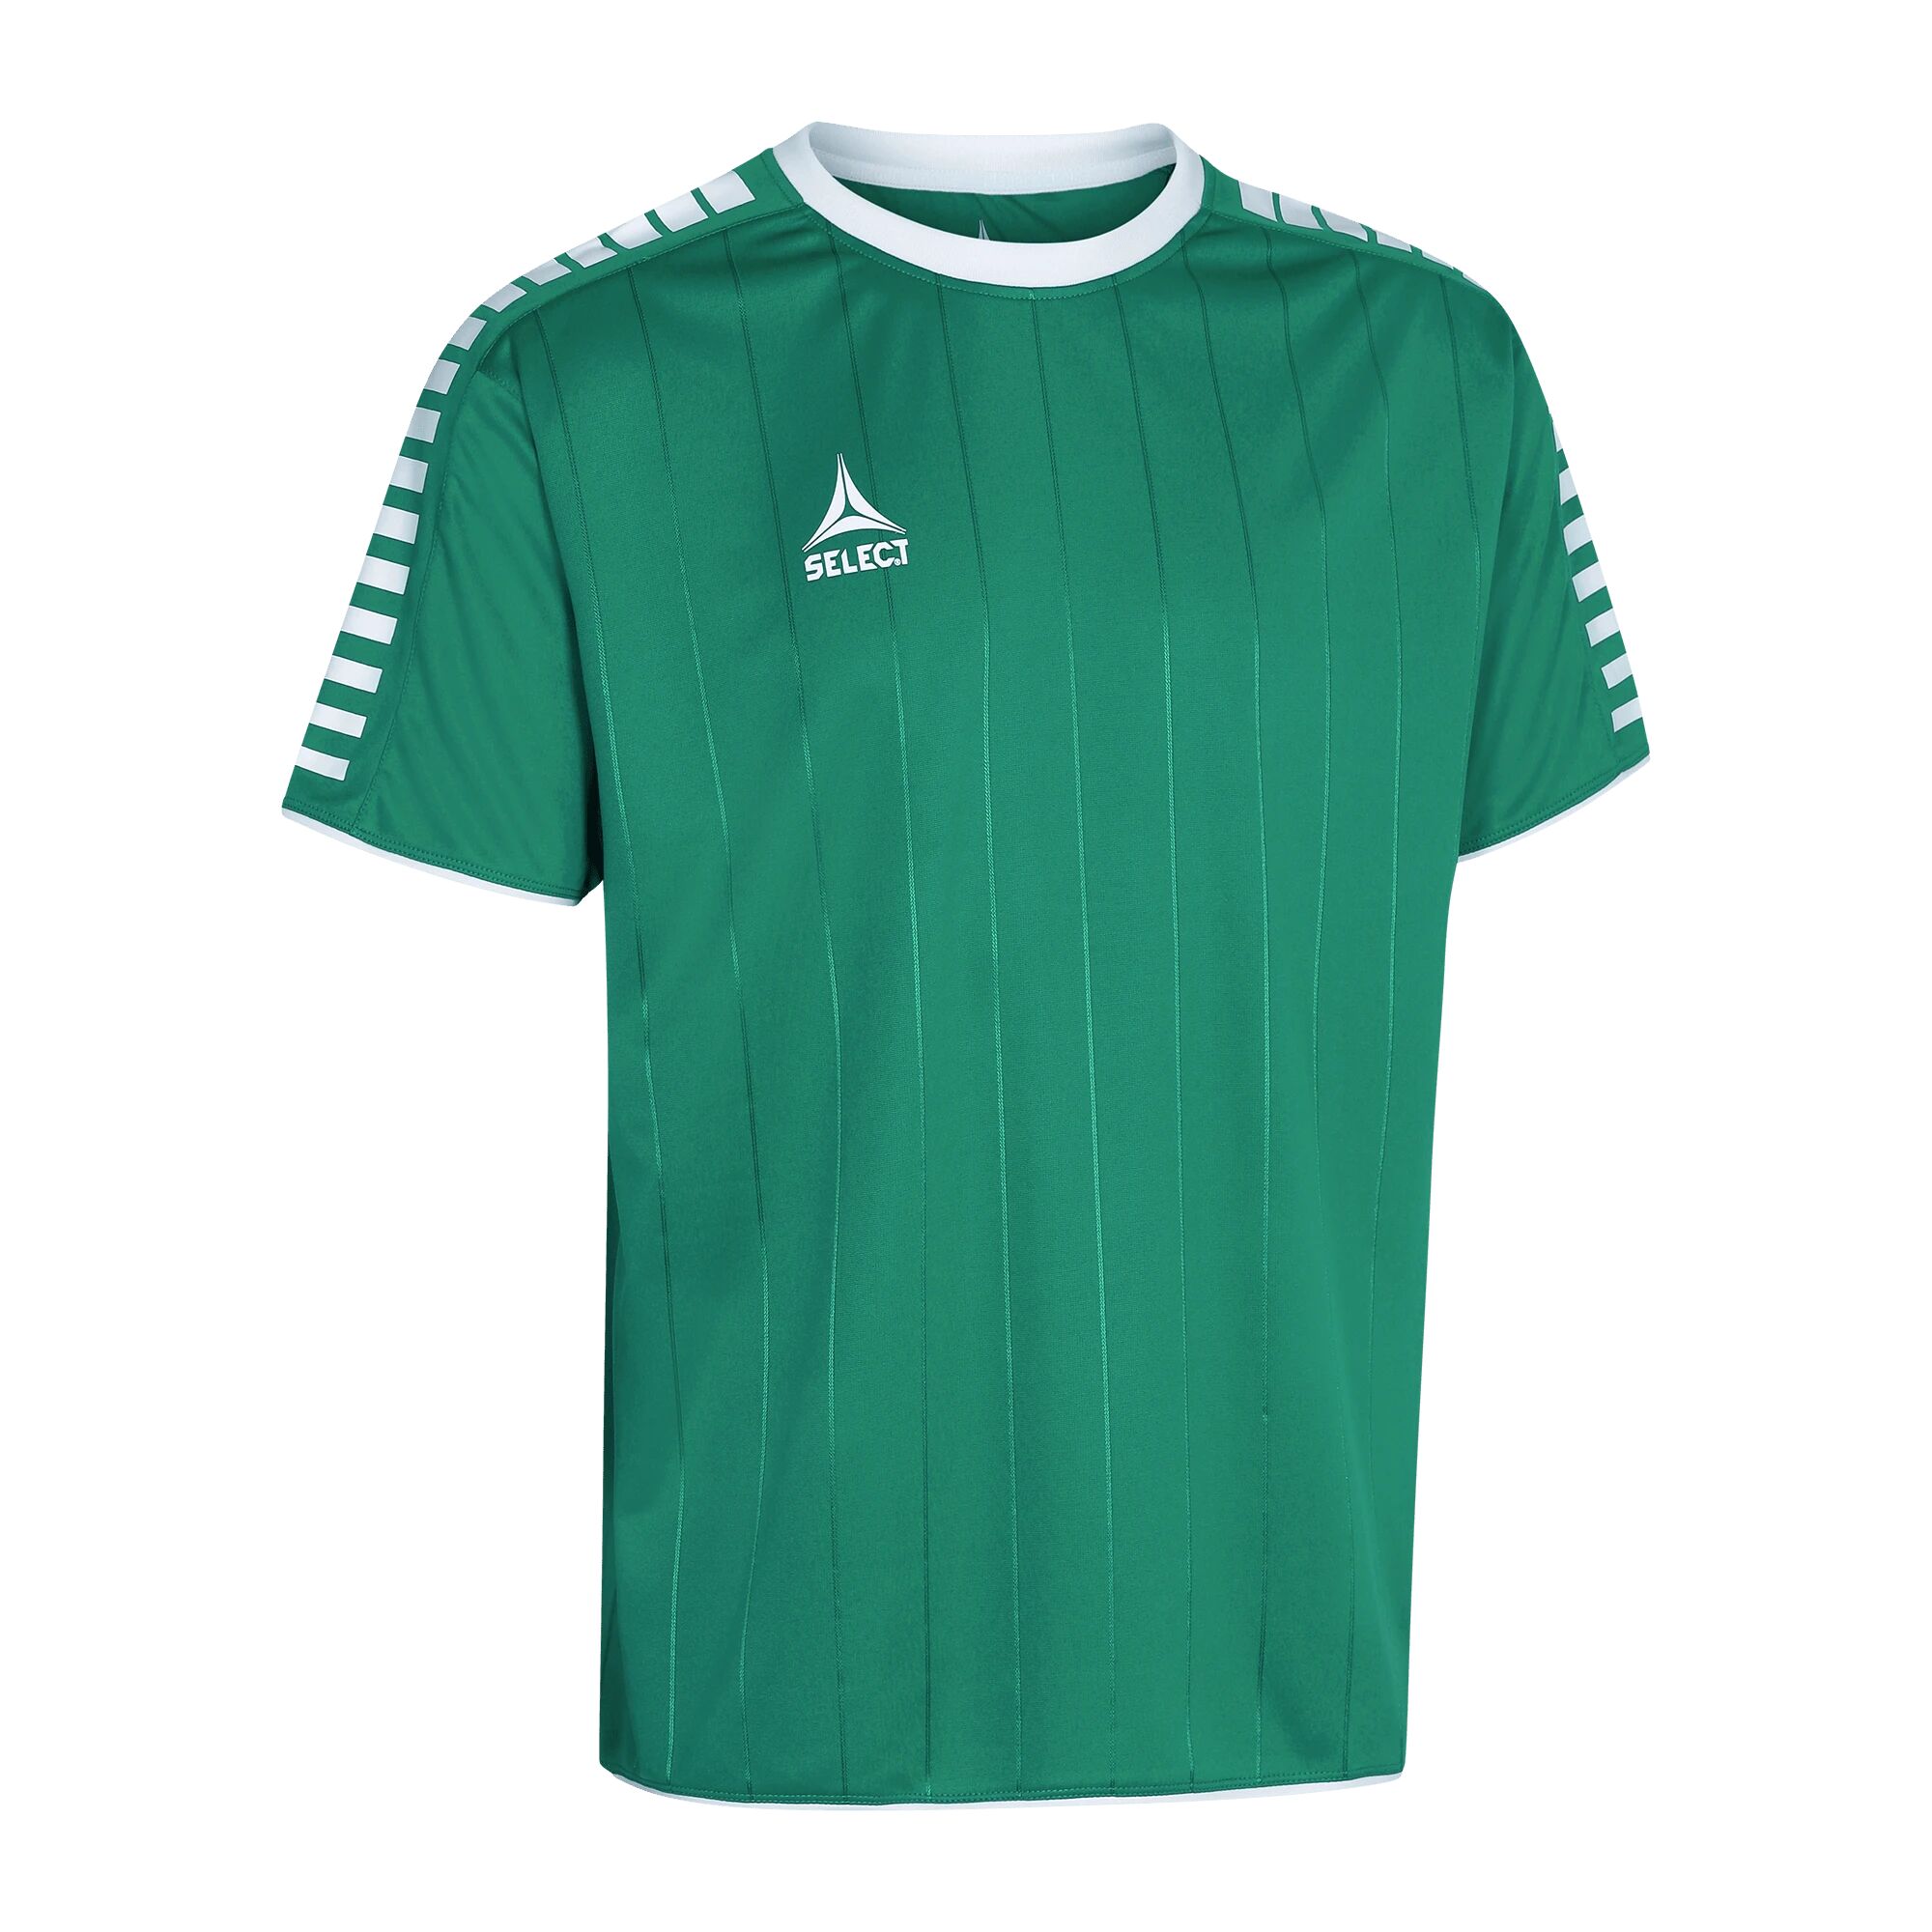 Select Player shirt S/S Argentina, fotballtrøye senior XL Green